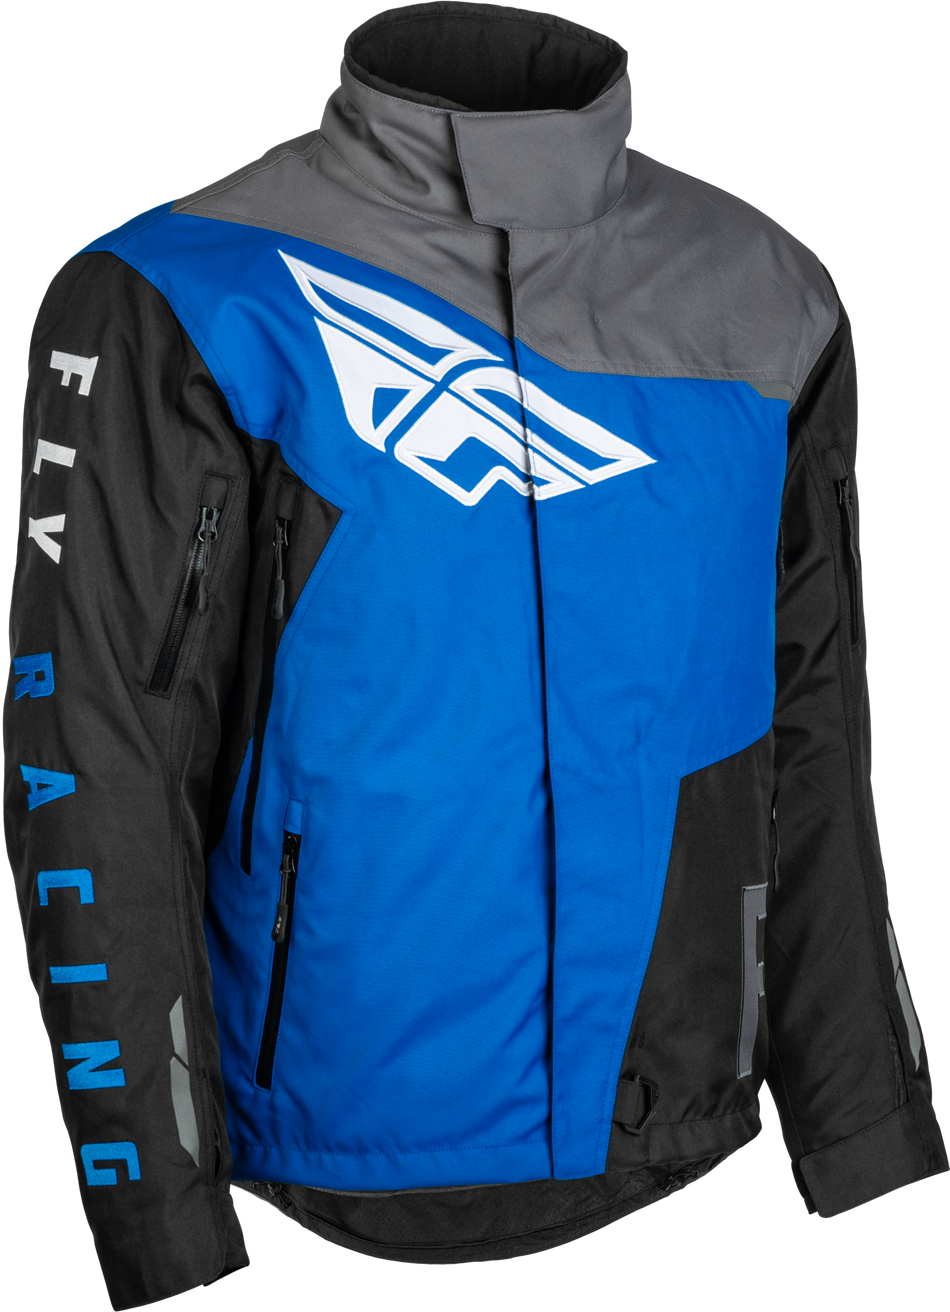 FLY RACING Snx Pro Jacket Black/Grey/Blue Lg 470-4116L